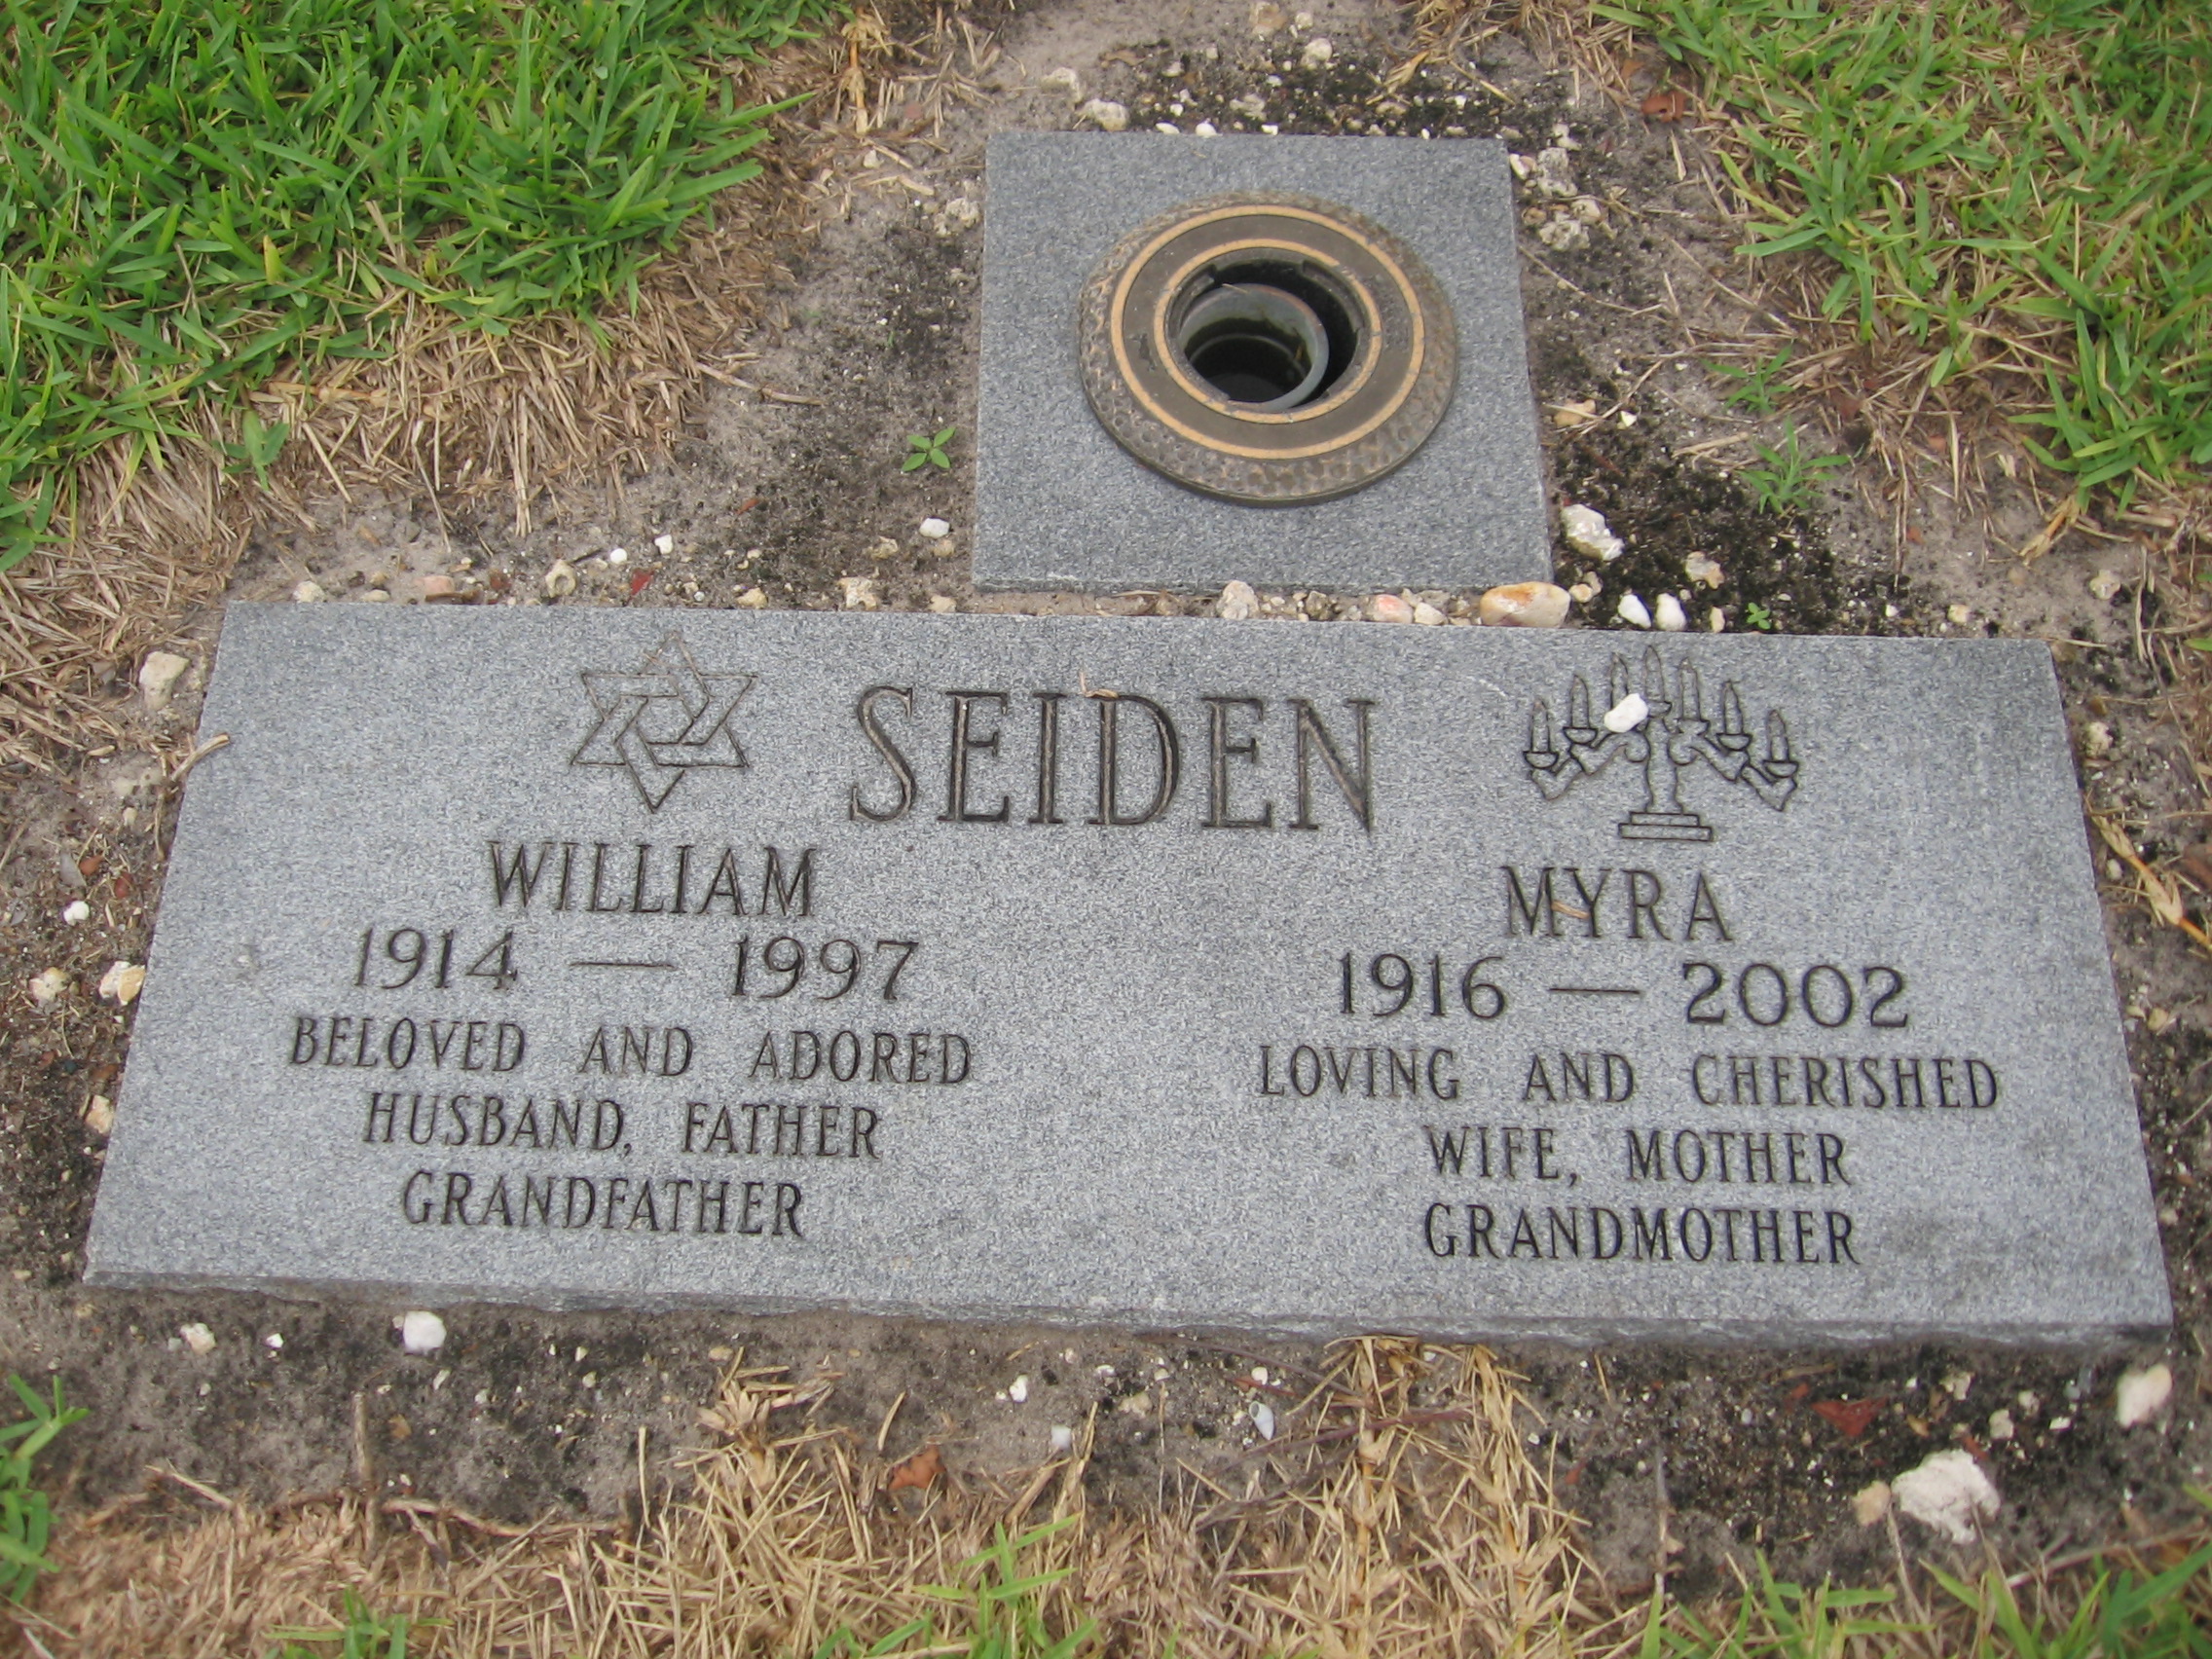 William Seiden